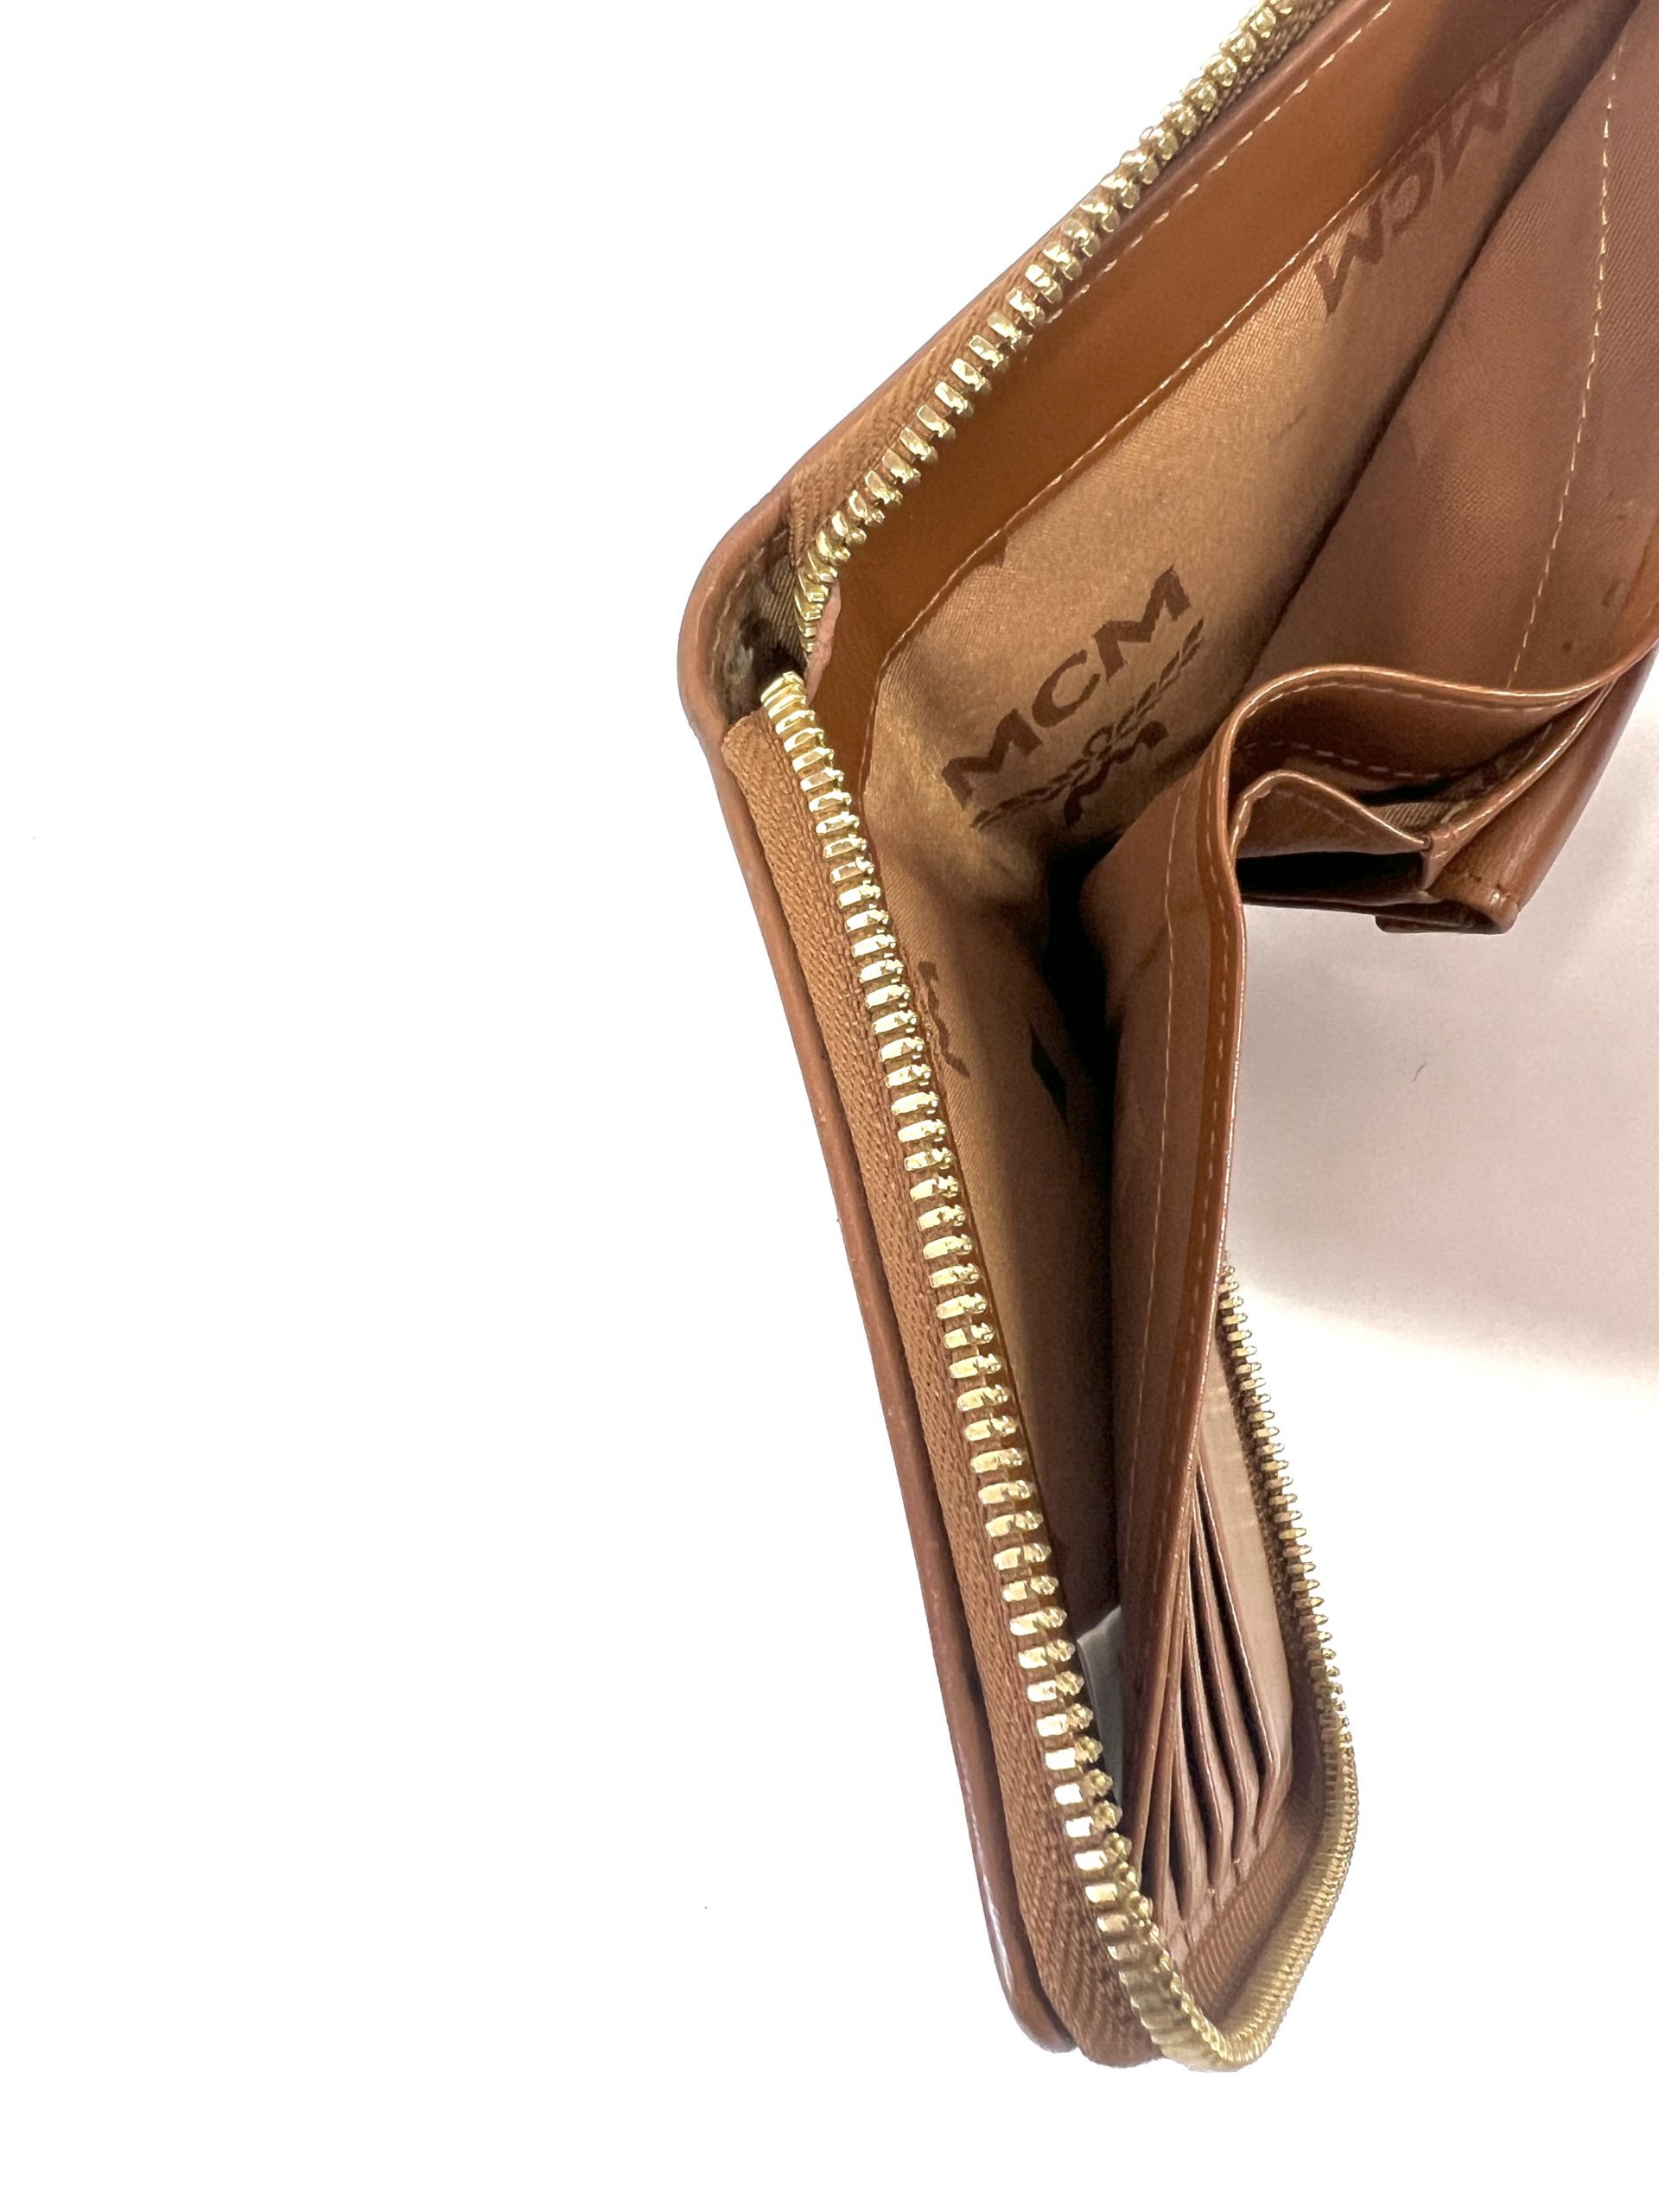 MCM Shoulder Bag Drawstring Brown Leather Mini Pochette